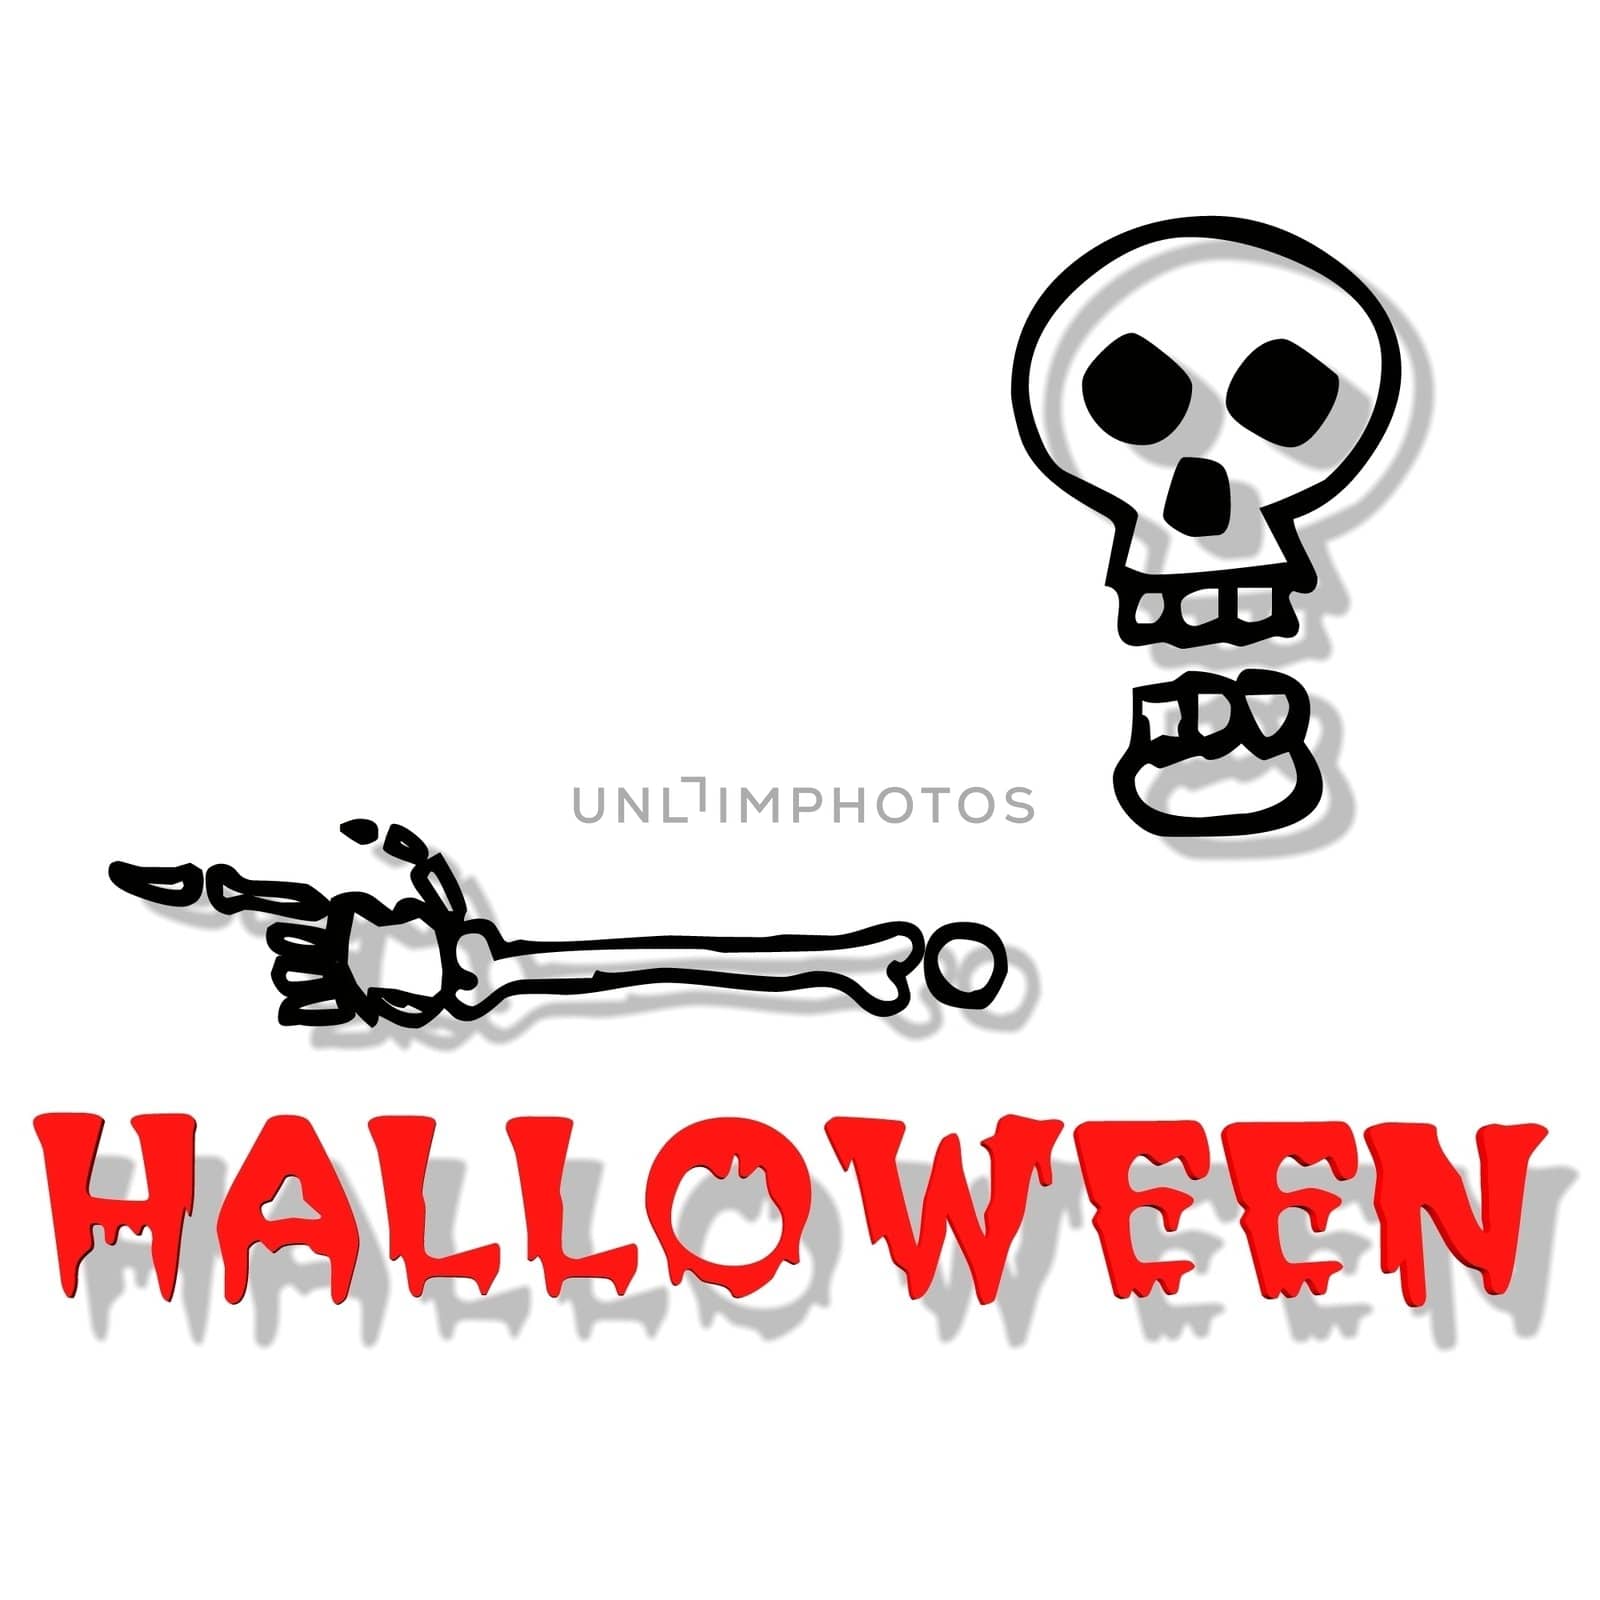 an illustration to celebrate halloween